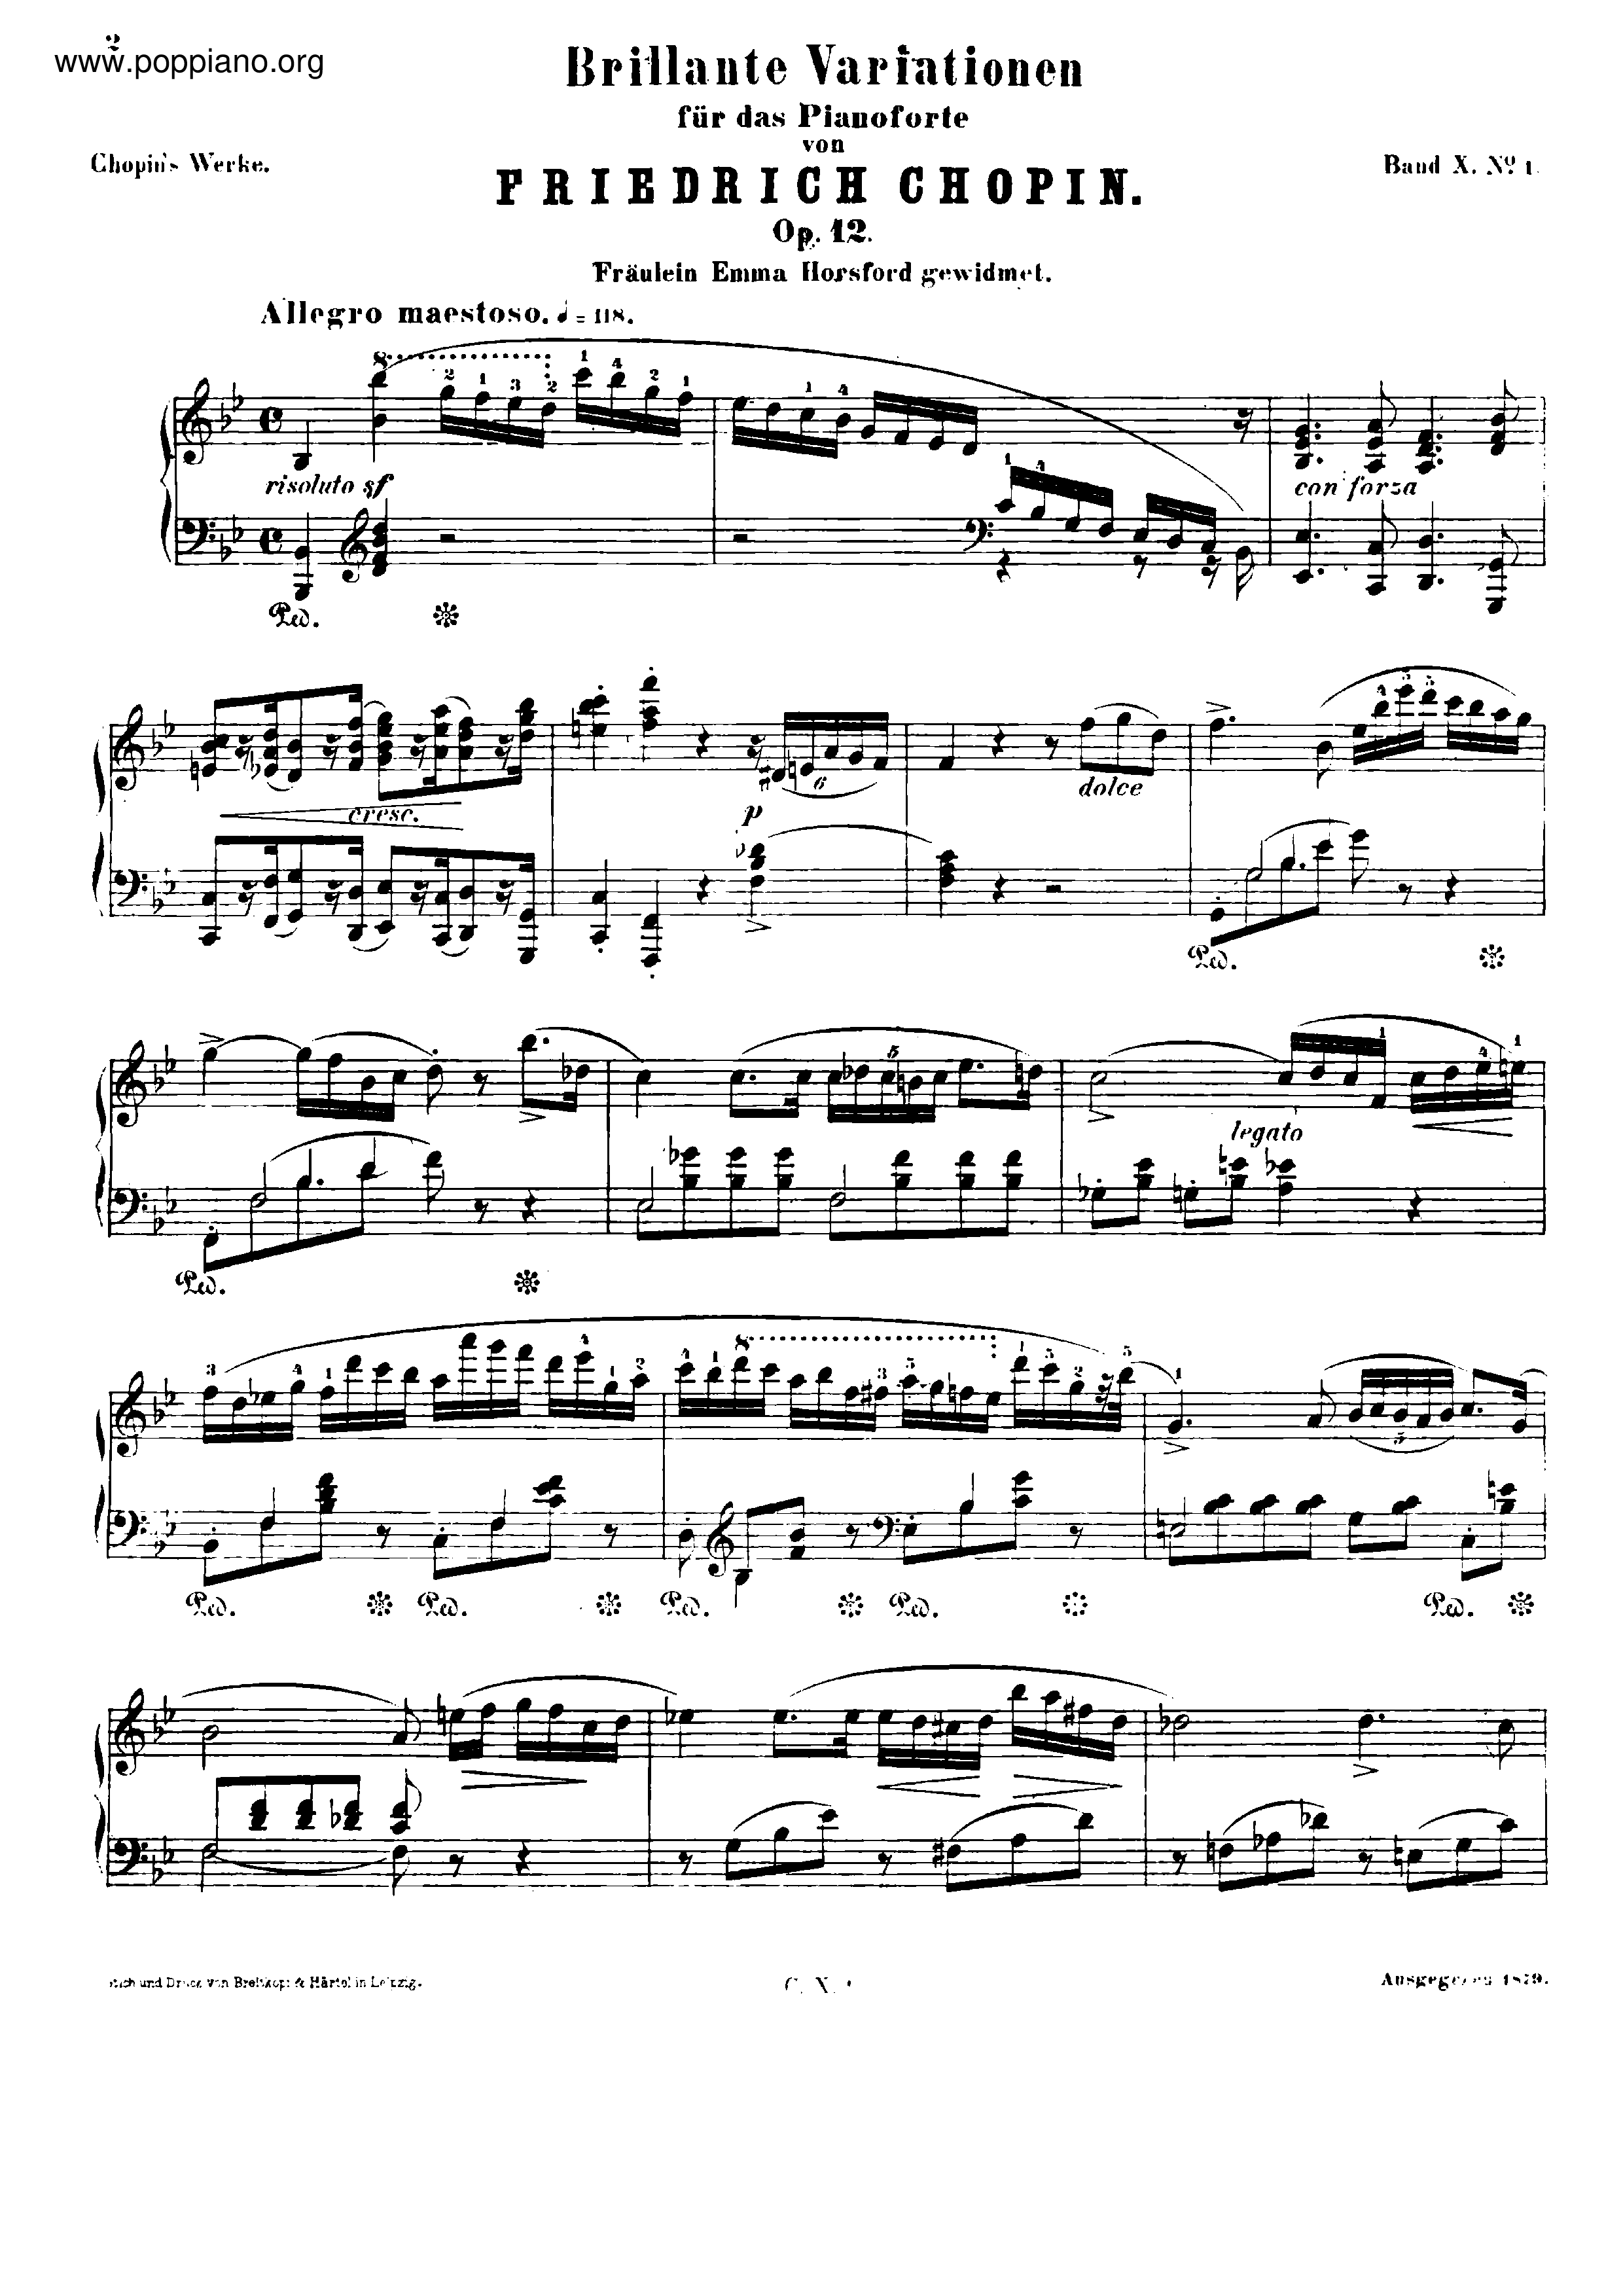 Variations Brillantes, Op. 12ピアノ譜